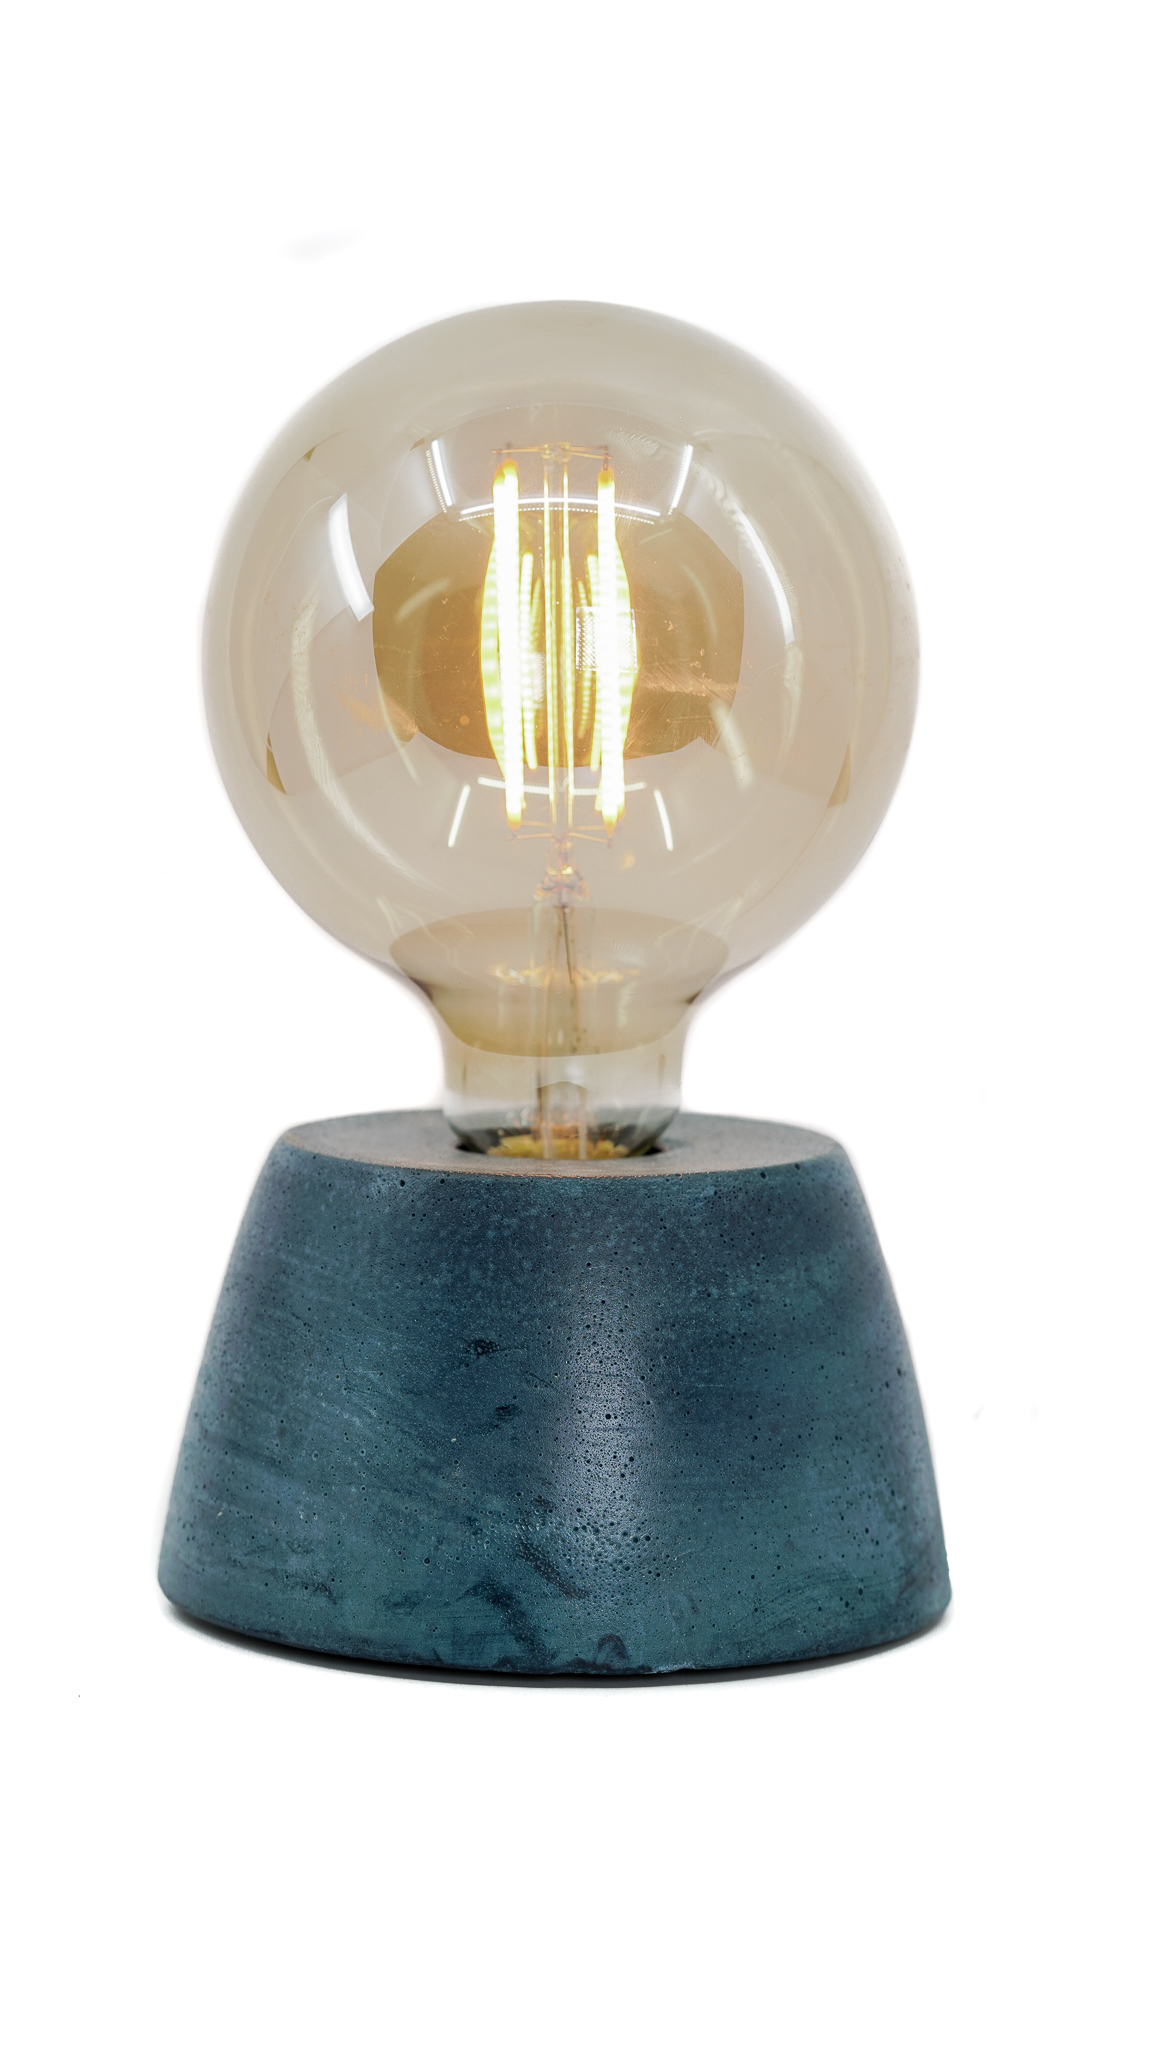 Lampe dôme en béton bleu pétrole fabrication artisanale